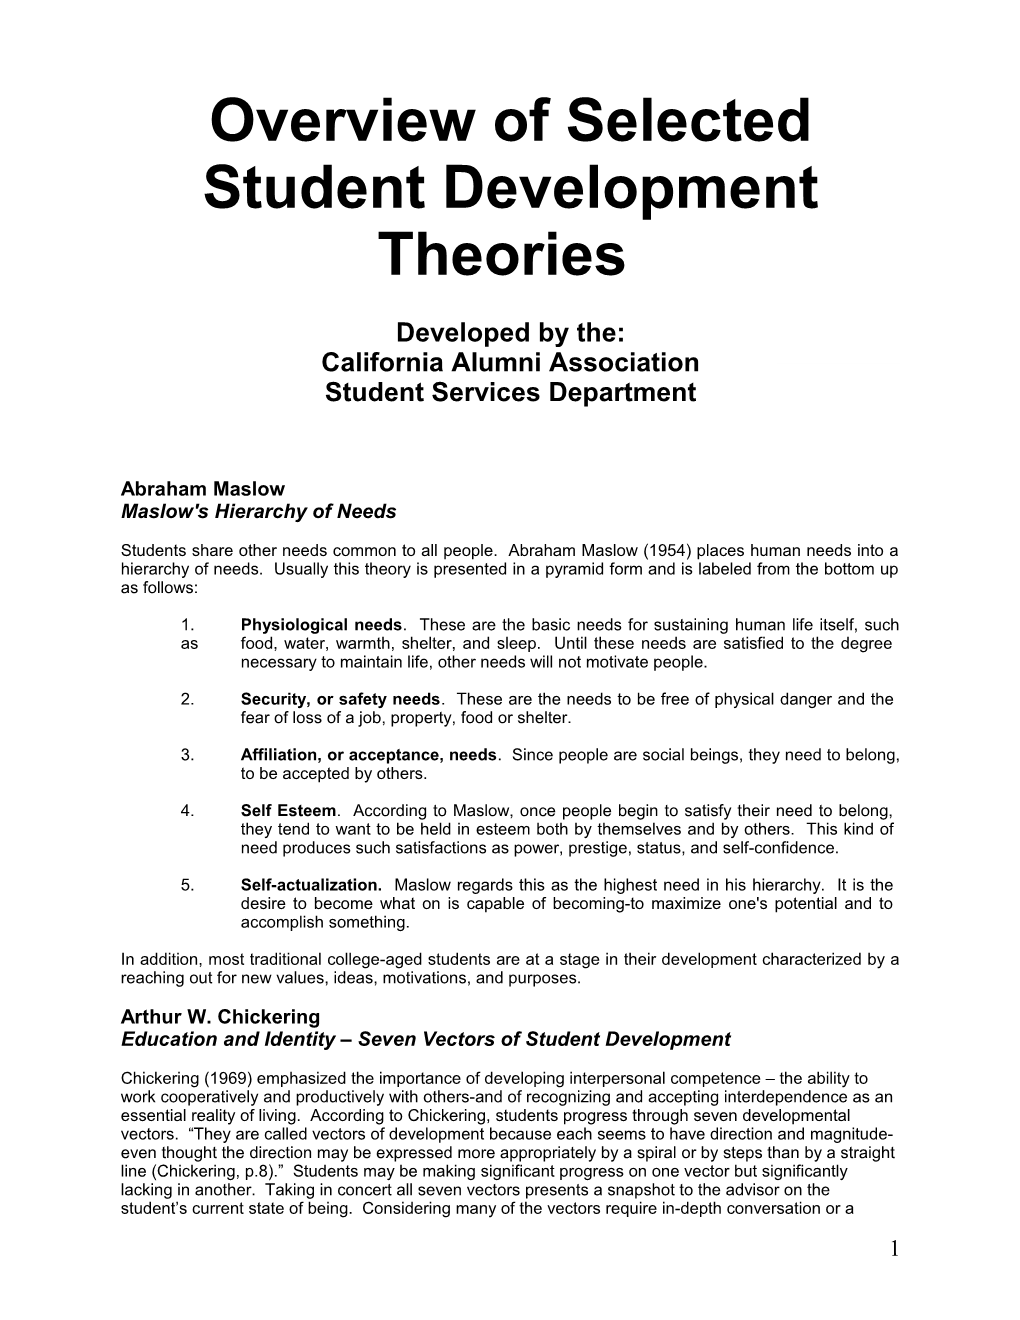 Student Development Theories